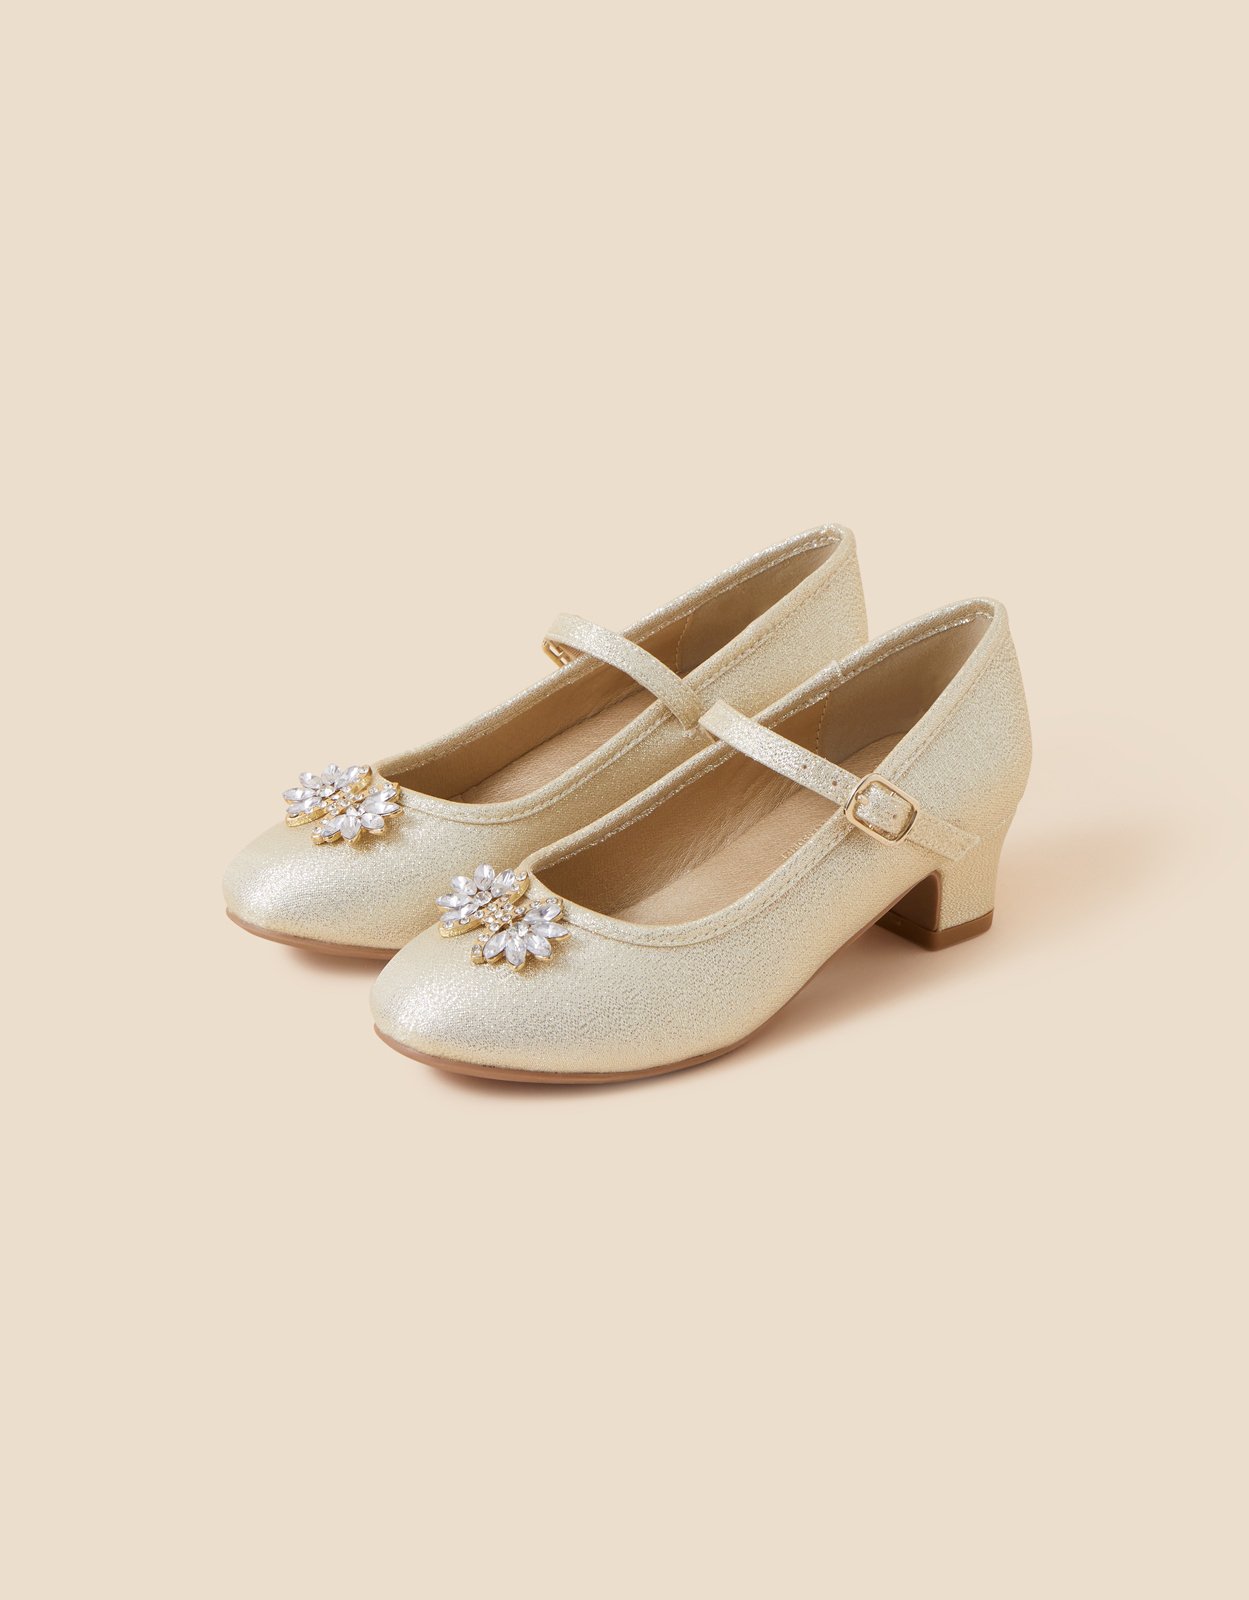 Accessorize Girl's Girls Shimmer Gem Flamenco Shoes Gold, Size: 2